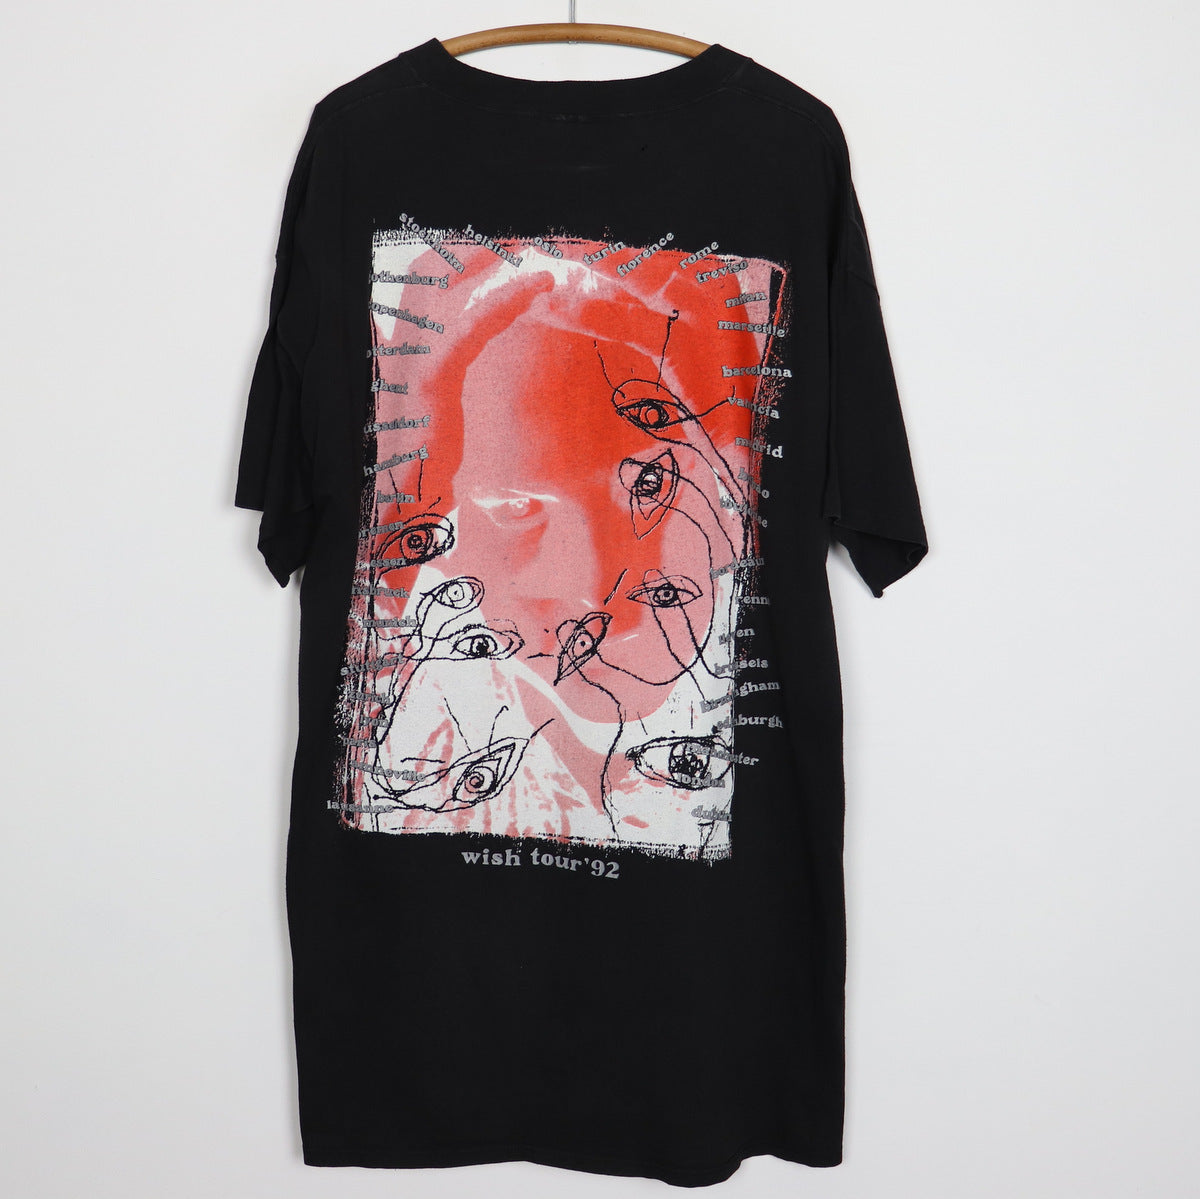 1992 The Cure Wish Tour Shirt